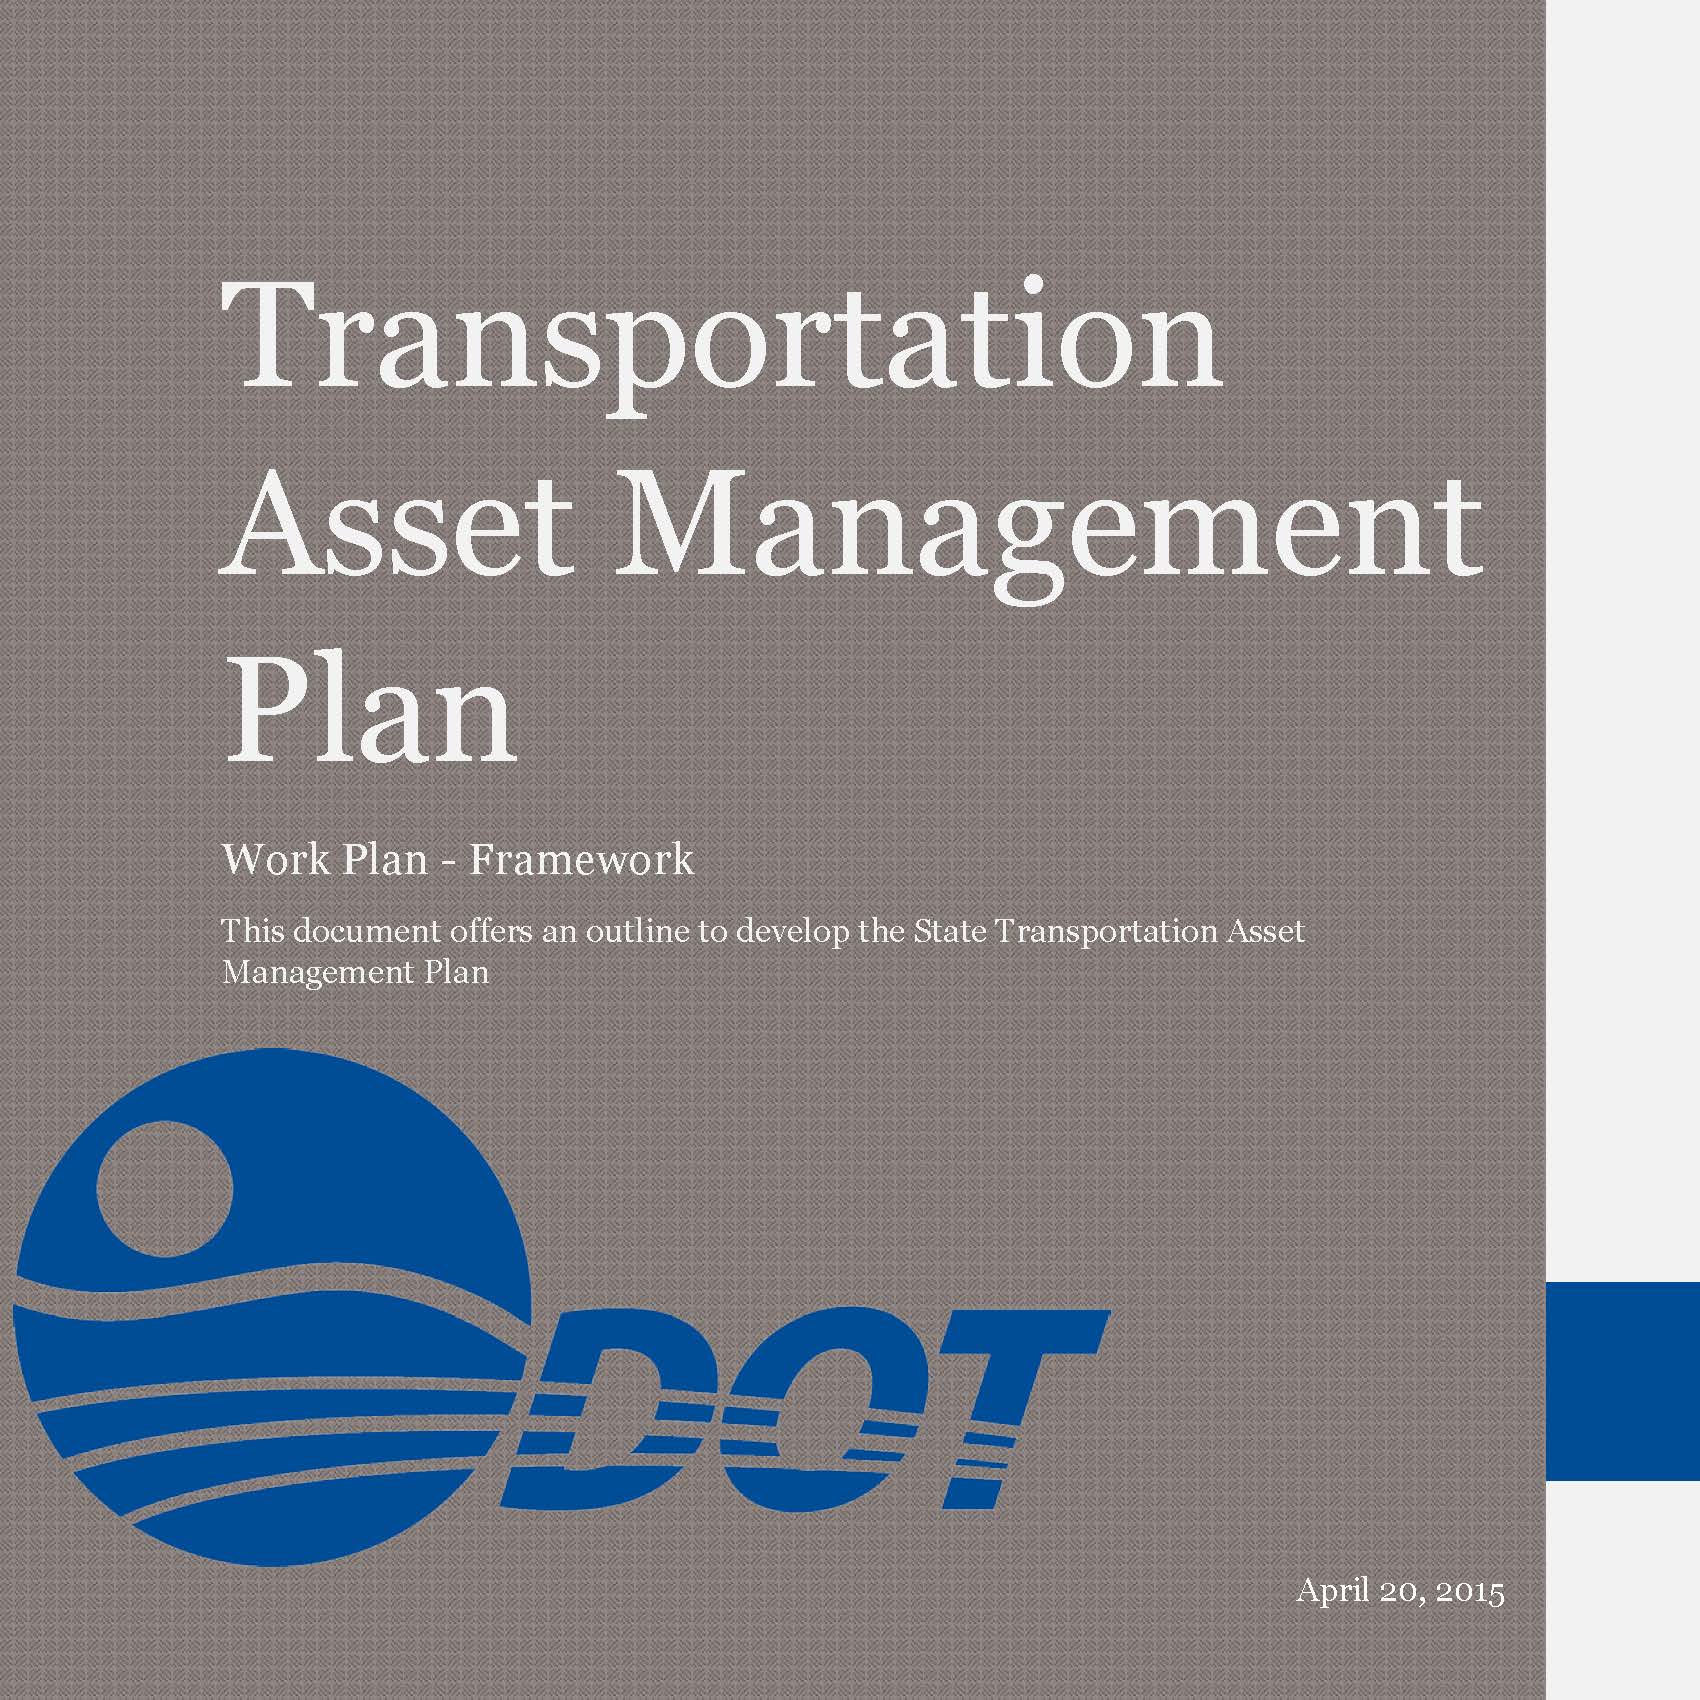 Transportation Asset Management Plan Document (under development)